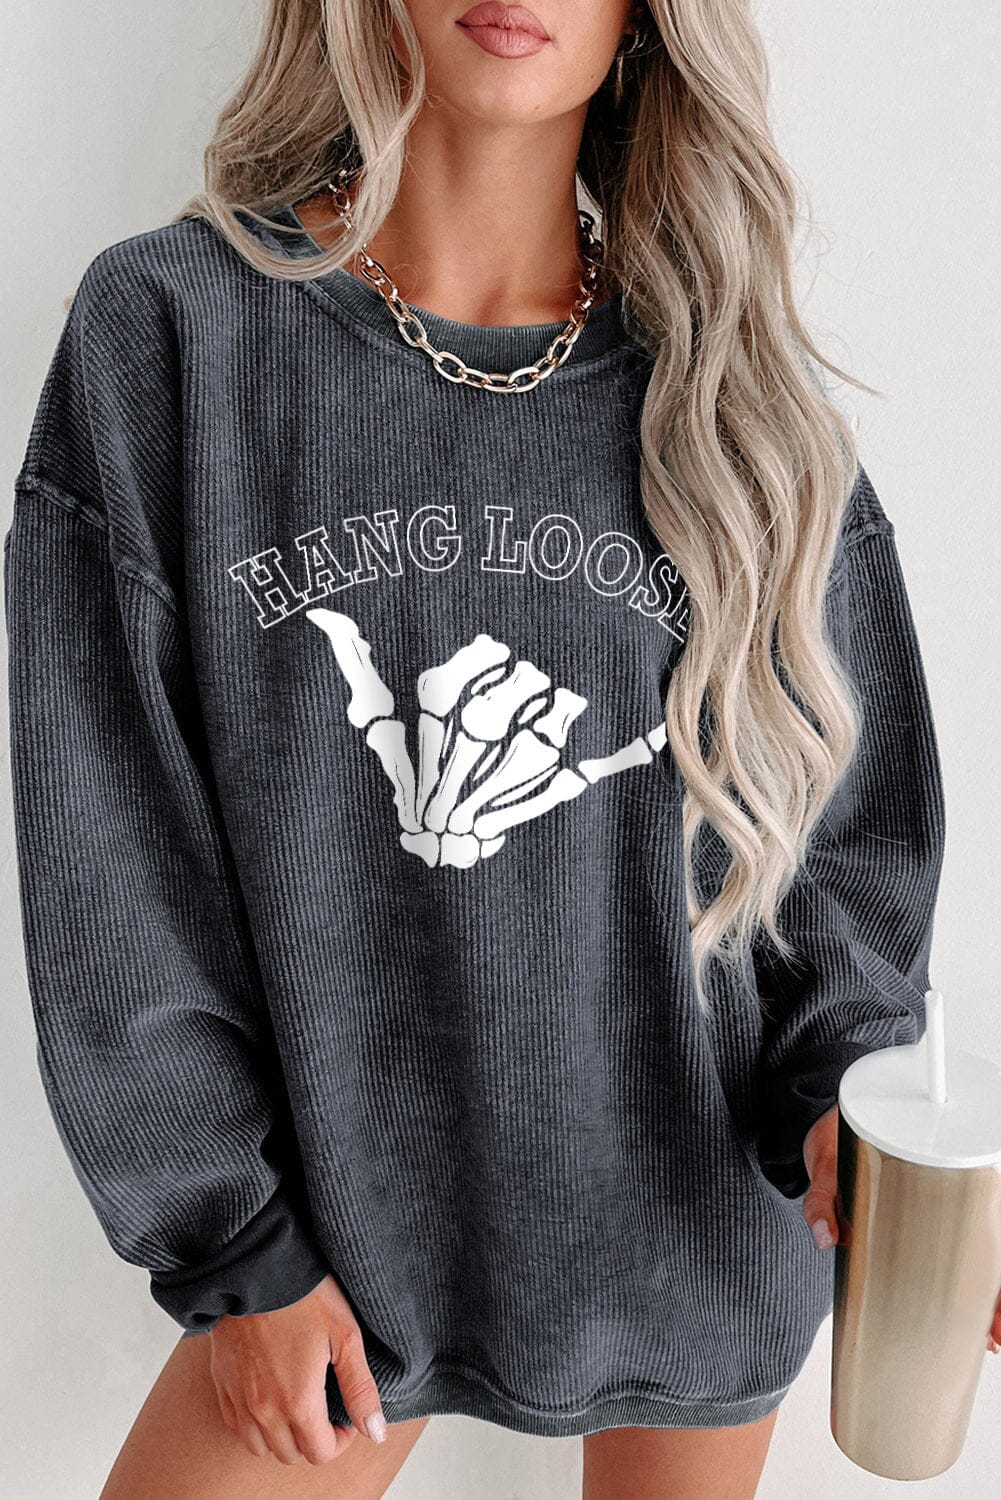 Skeleton Hand Graphic Sweatshirt - Sydney So Sweet